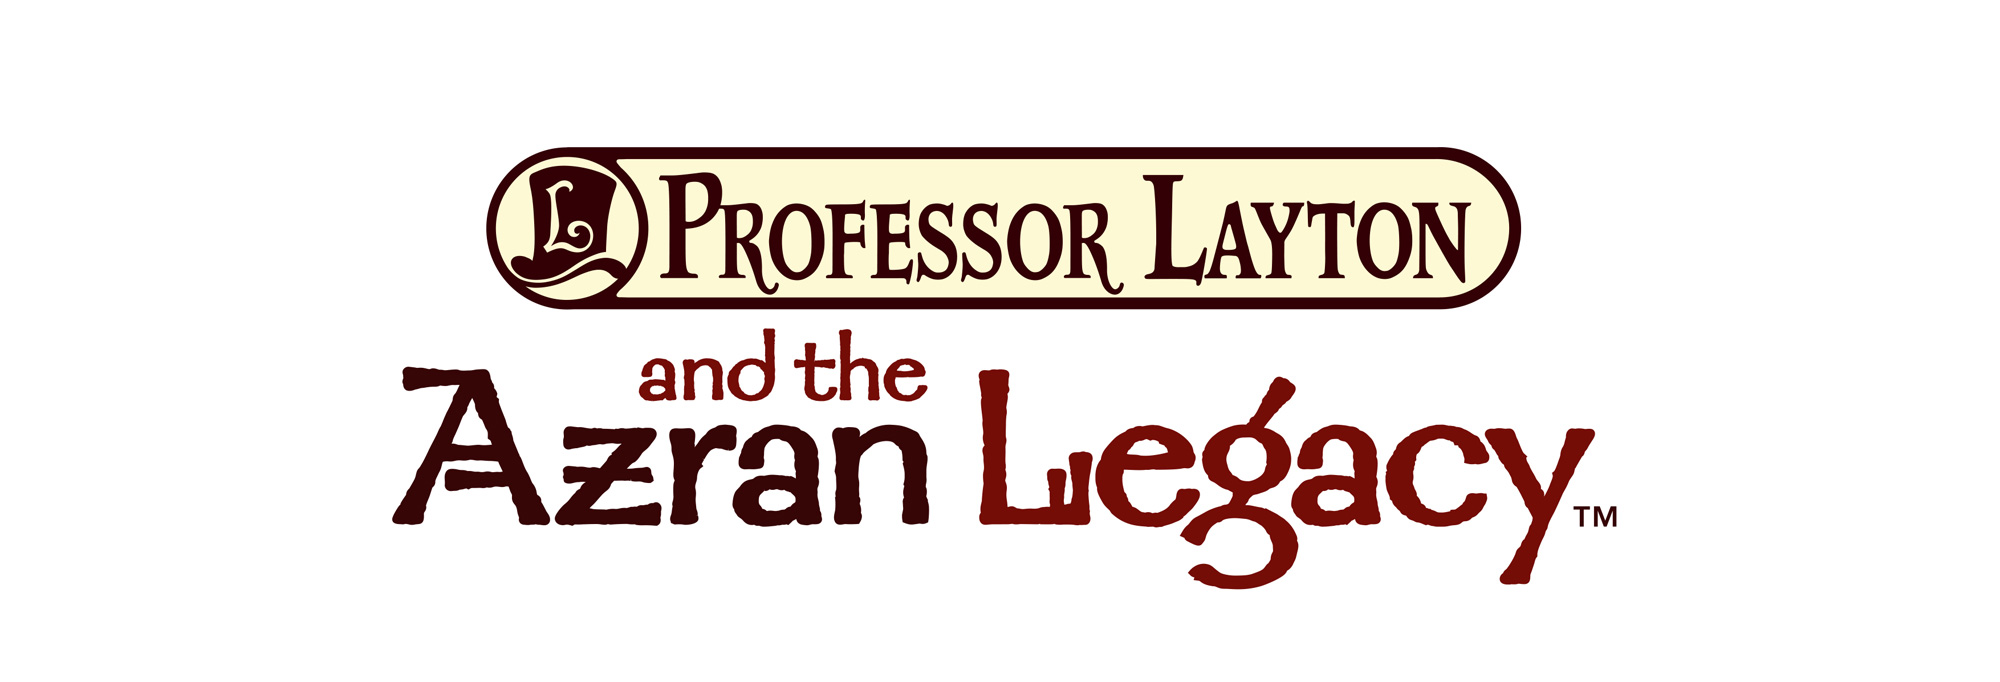 Professor Layton and the Azran Legacy Logo 001